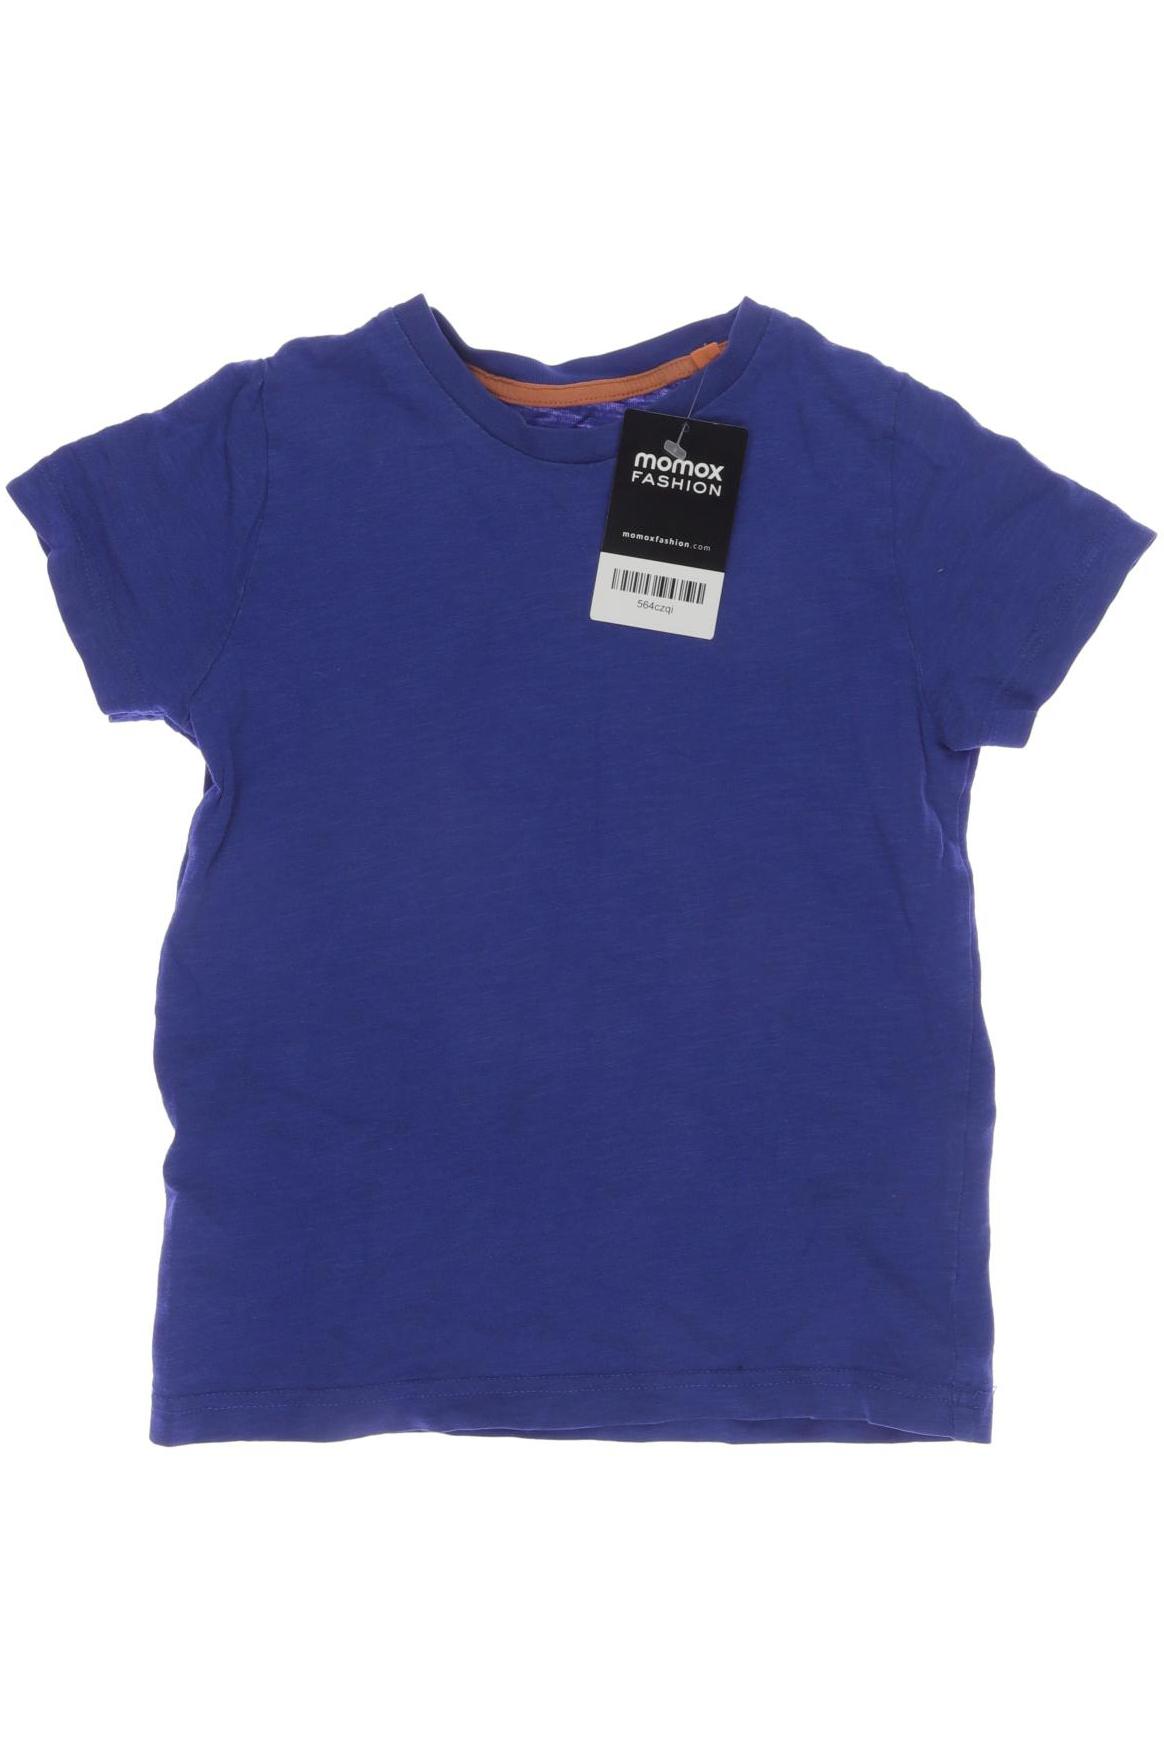 Mini Boden Herren T-Shirt, blau, Gr. 116 von Mini Boden